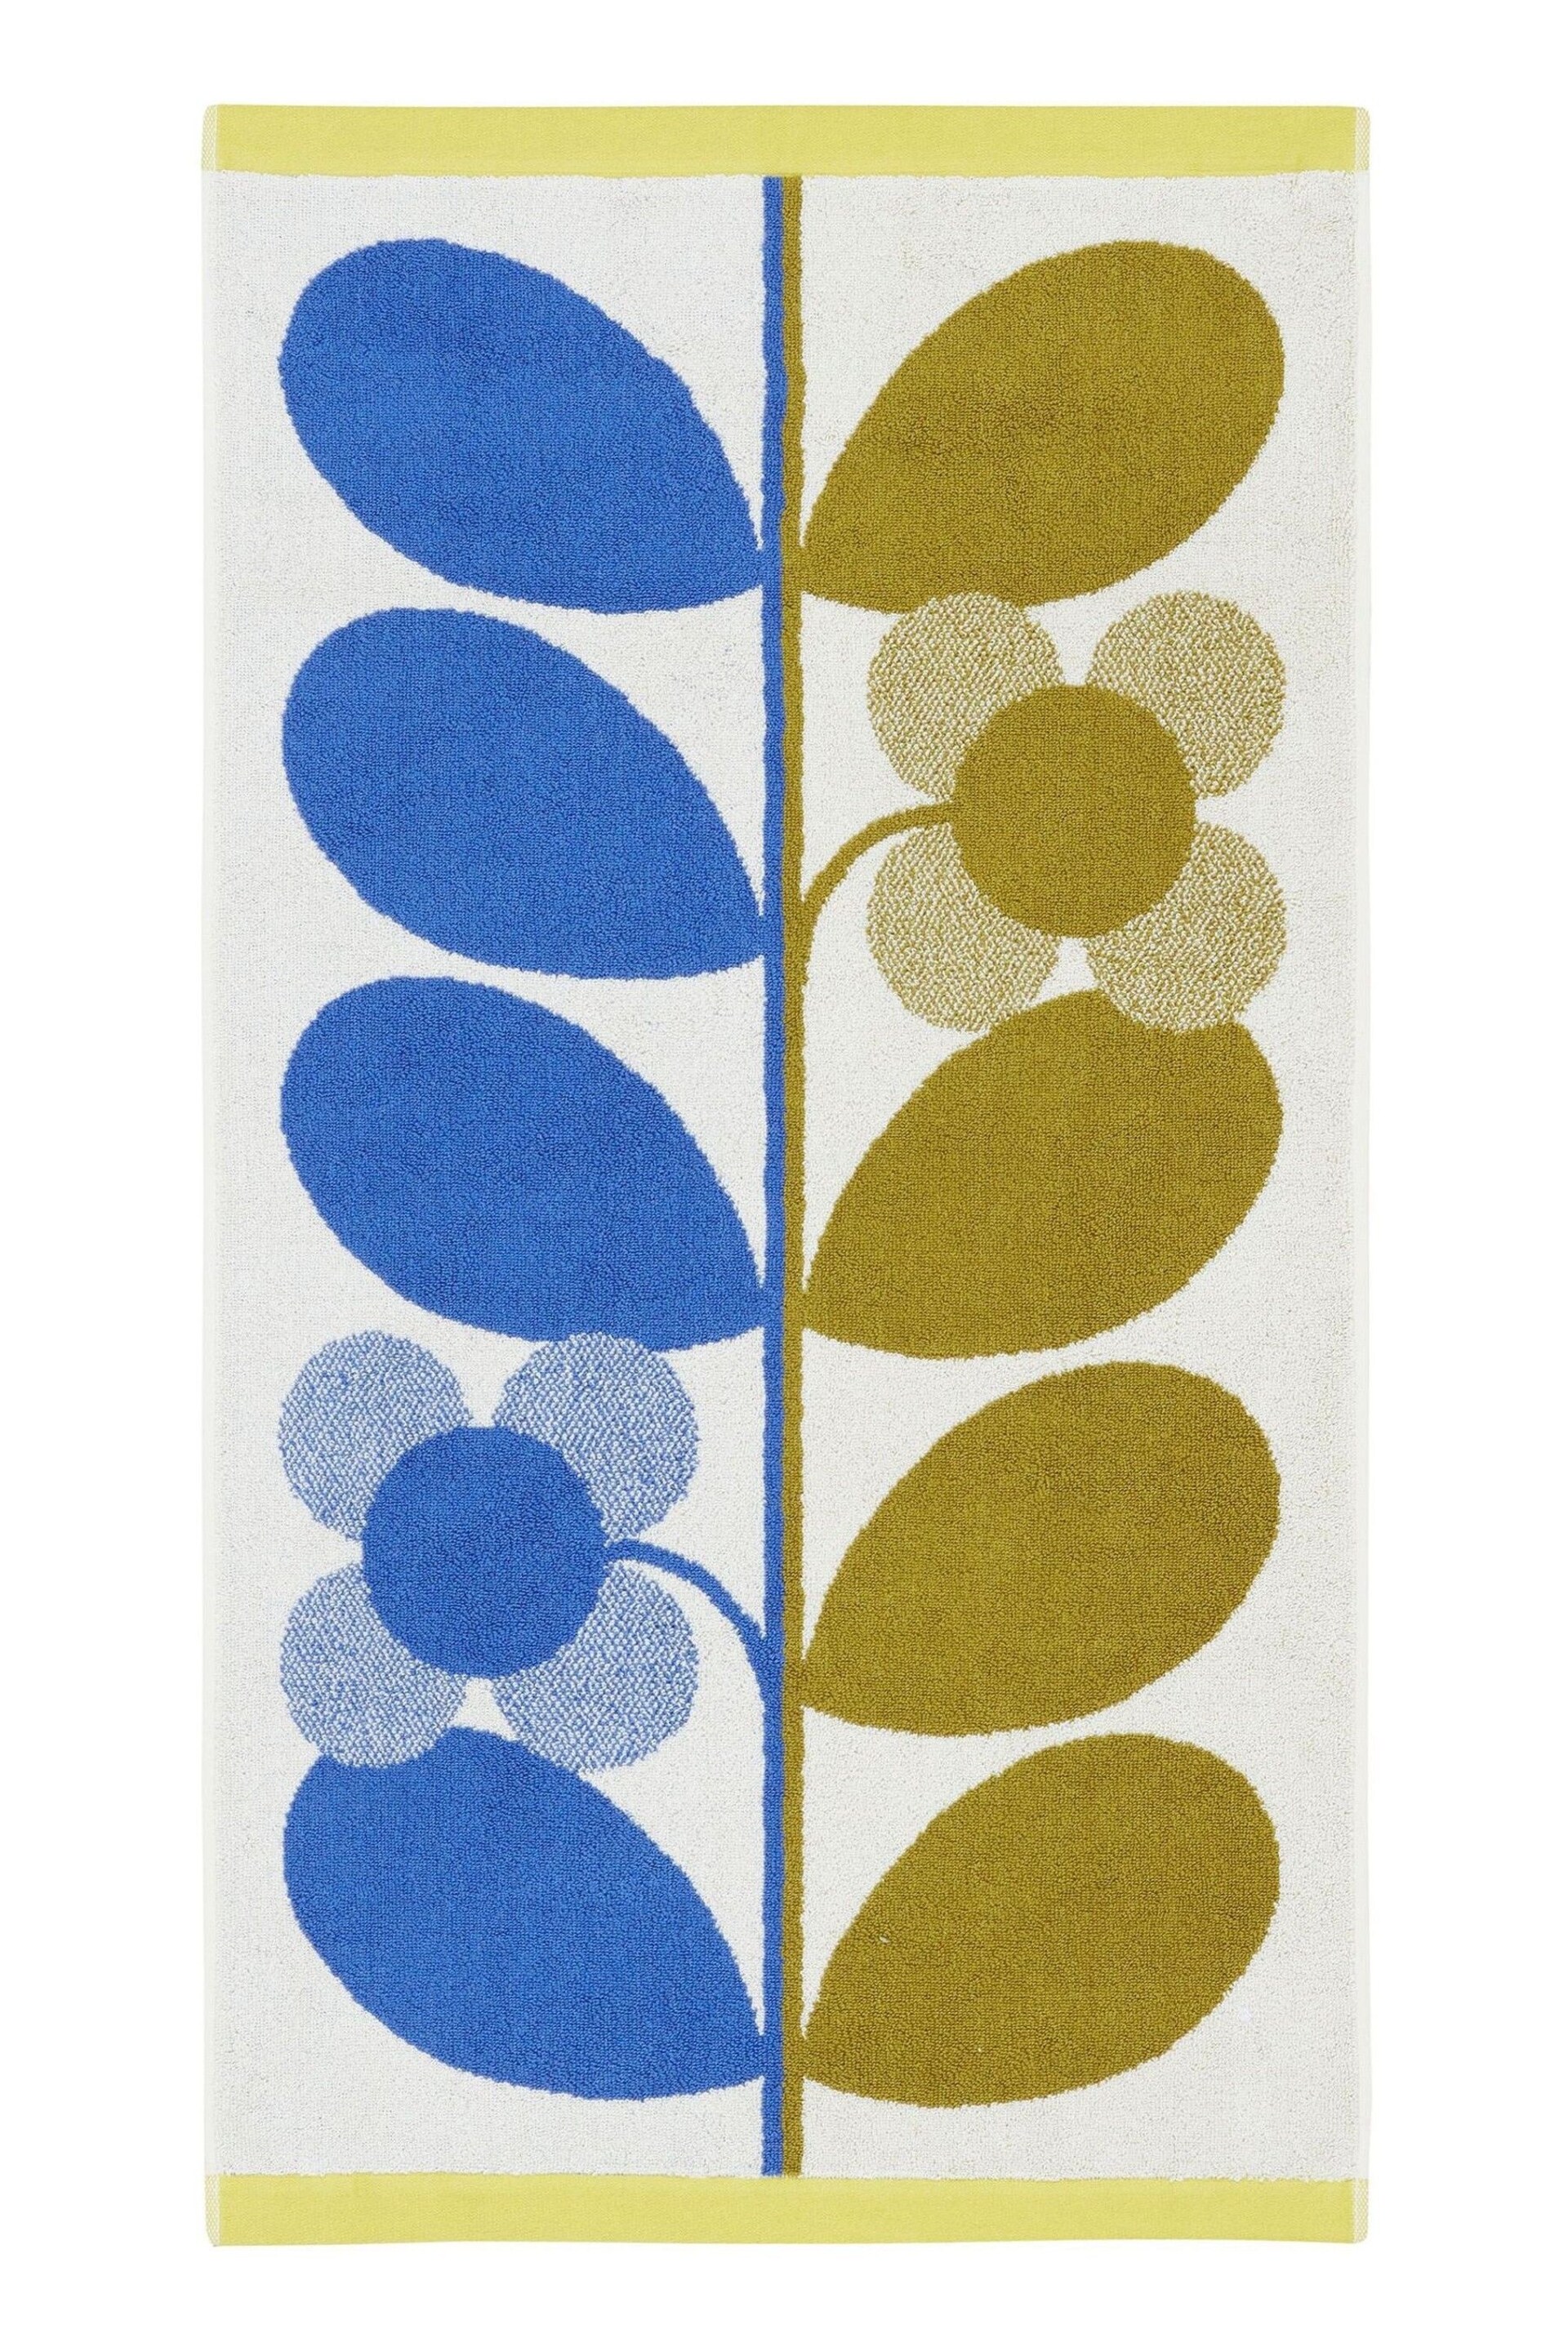 Orla Kiely Blue Fawn Stem Bloom Duo Towel - Image 4 of 6